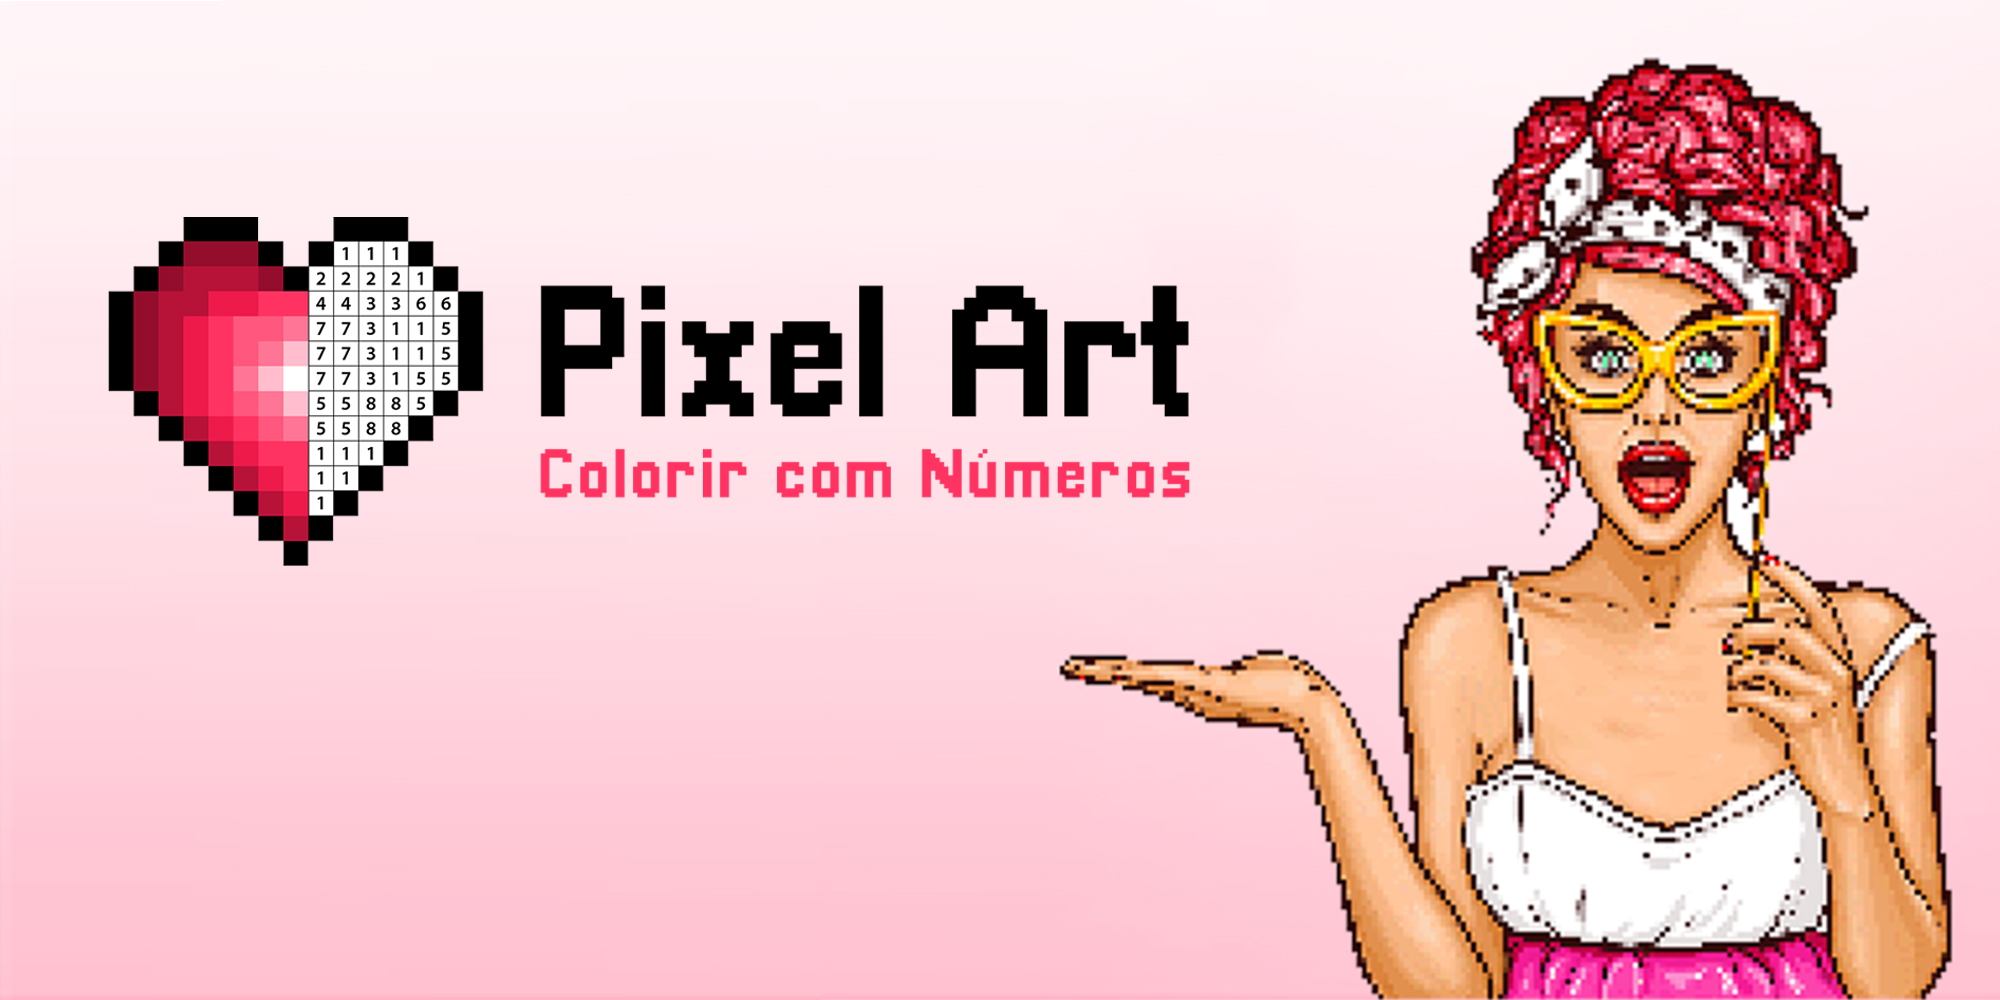 Pixel Art - Jogo de pintar na App Store